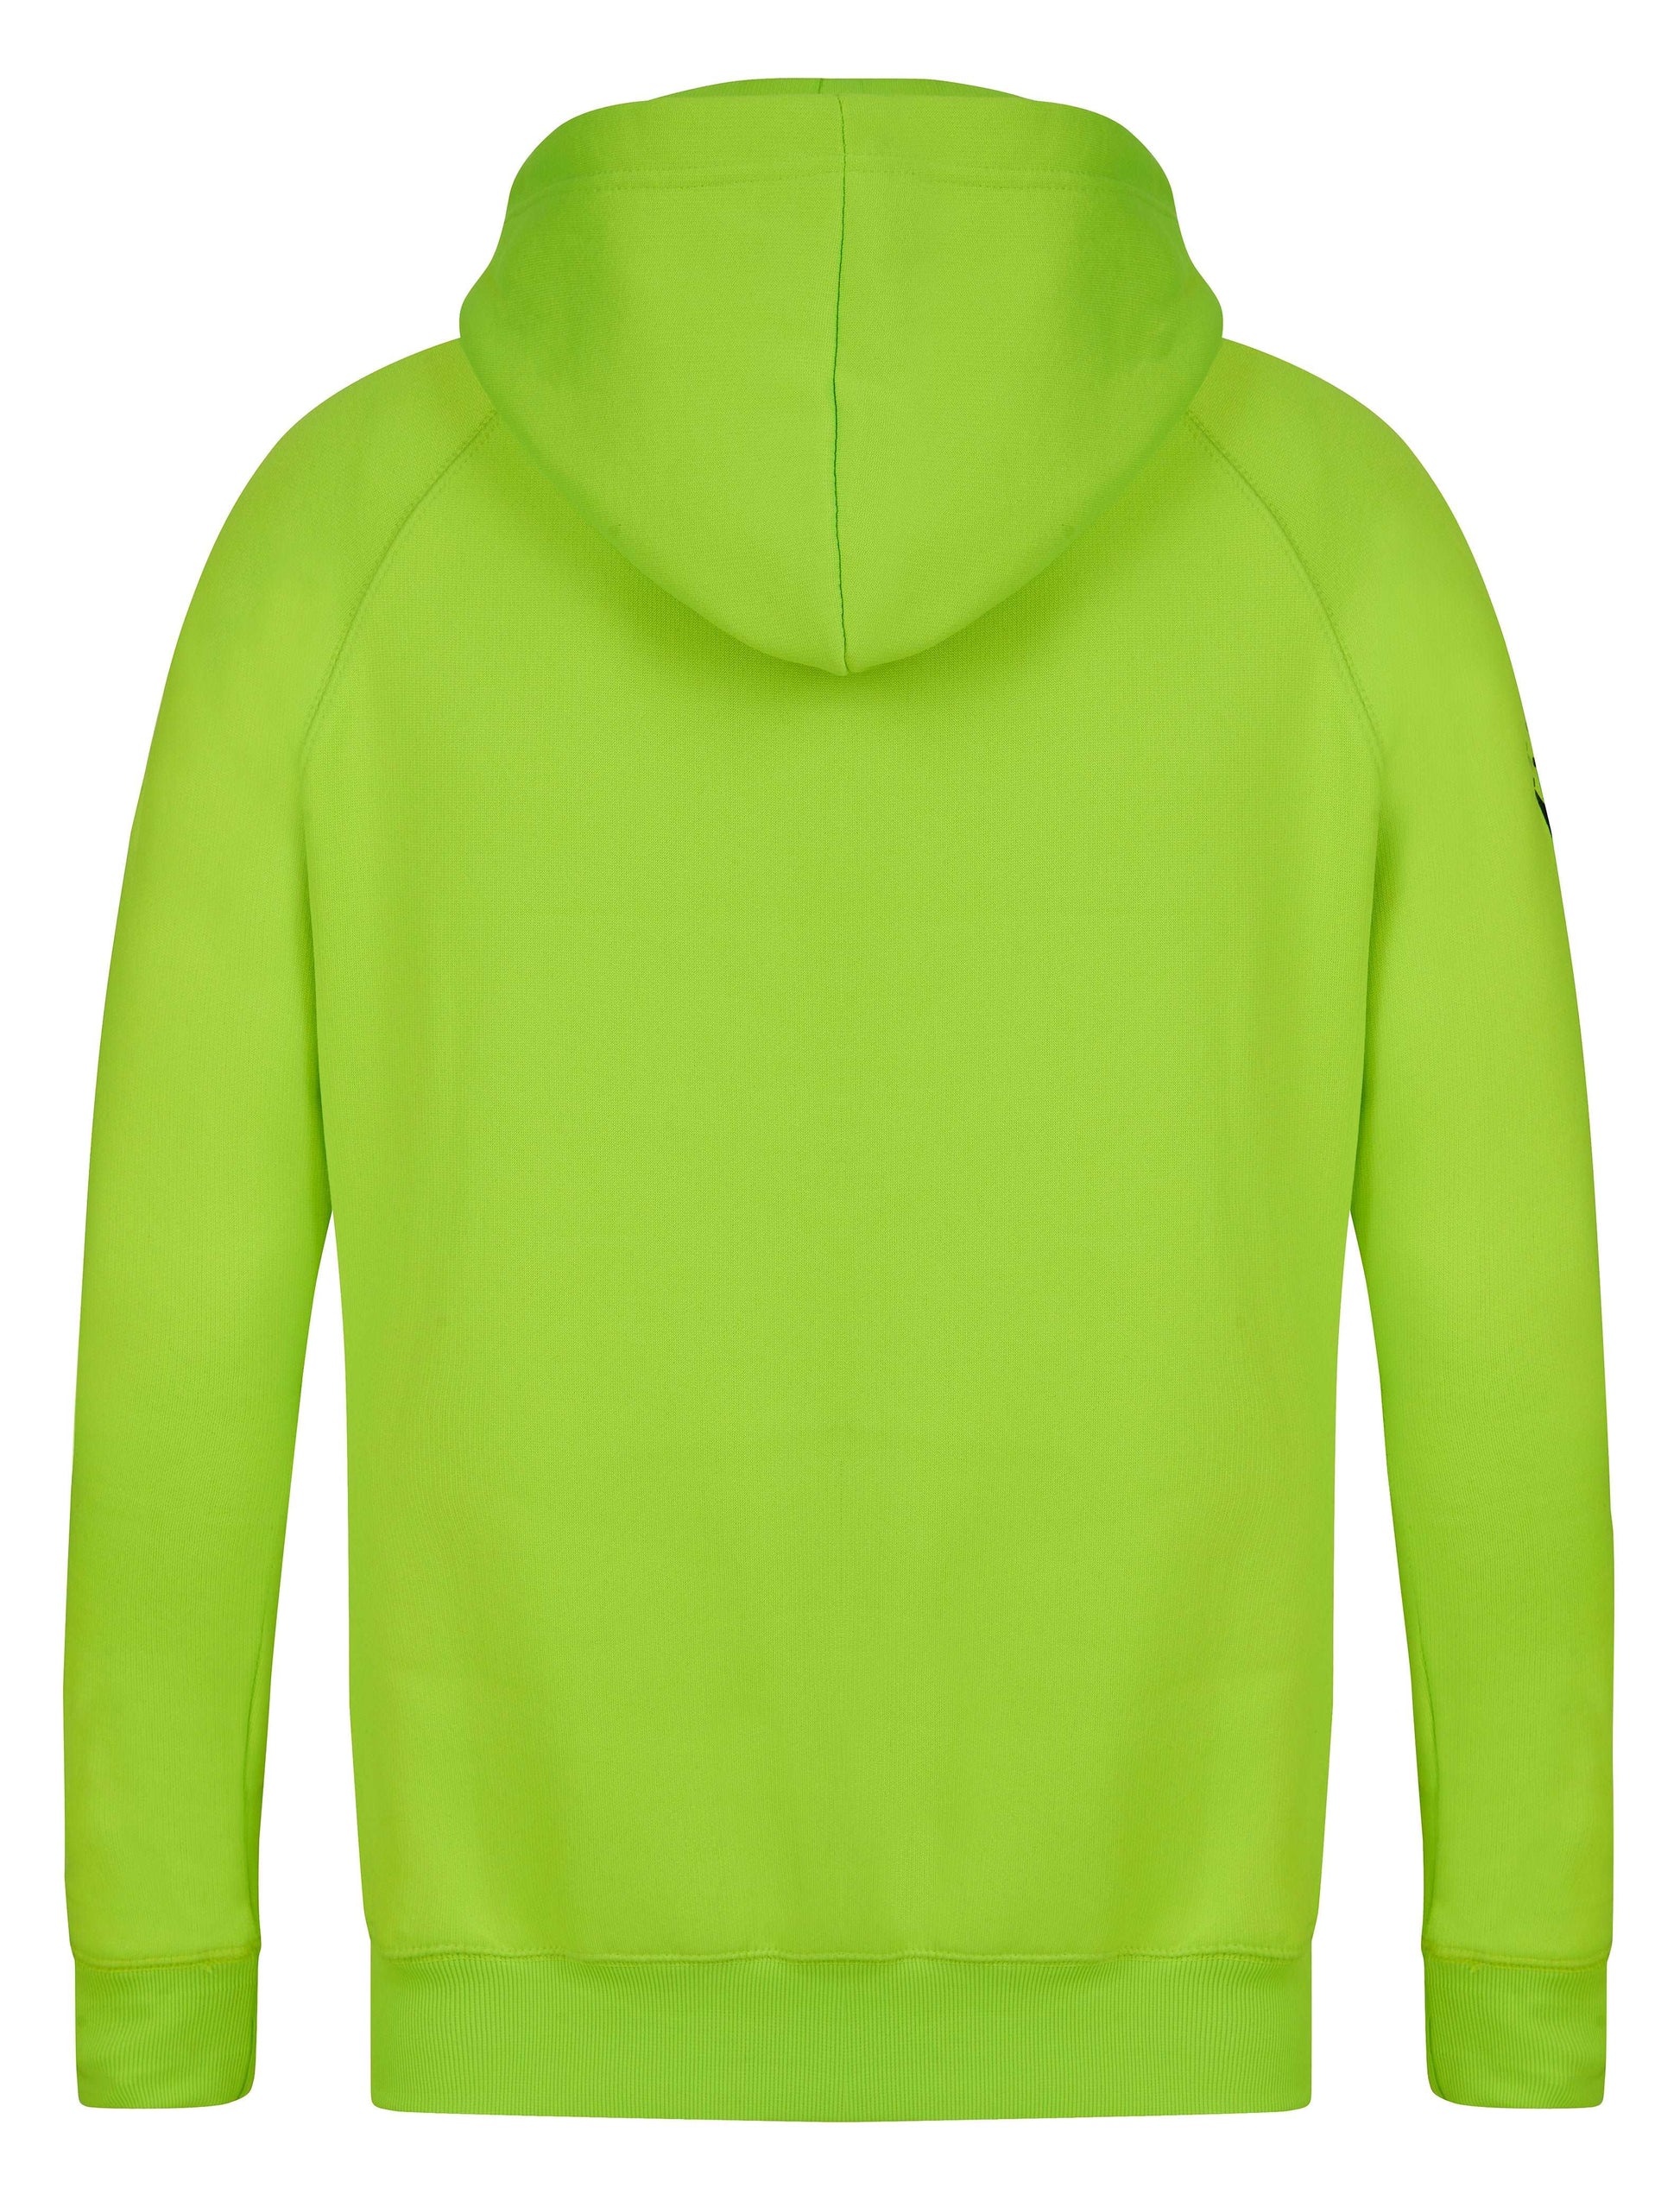 back of the hoodie Yungnrich illuminous Green Hoodie Jumper Black Logo